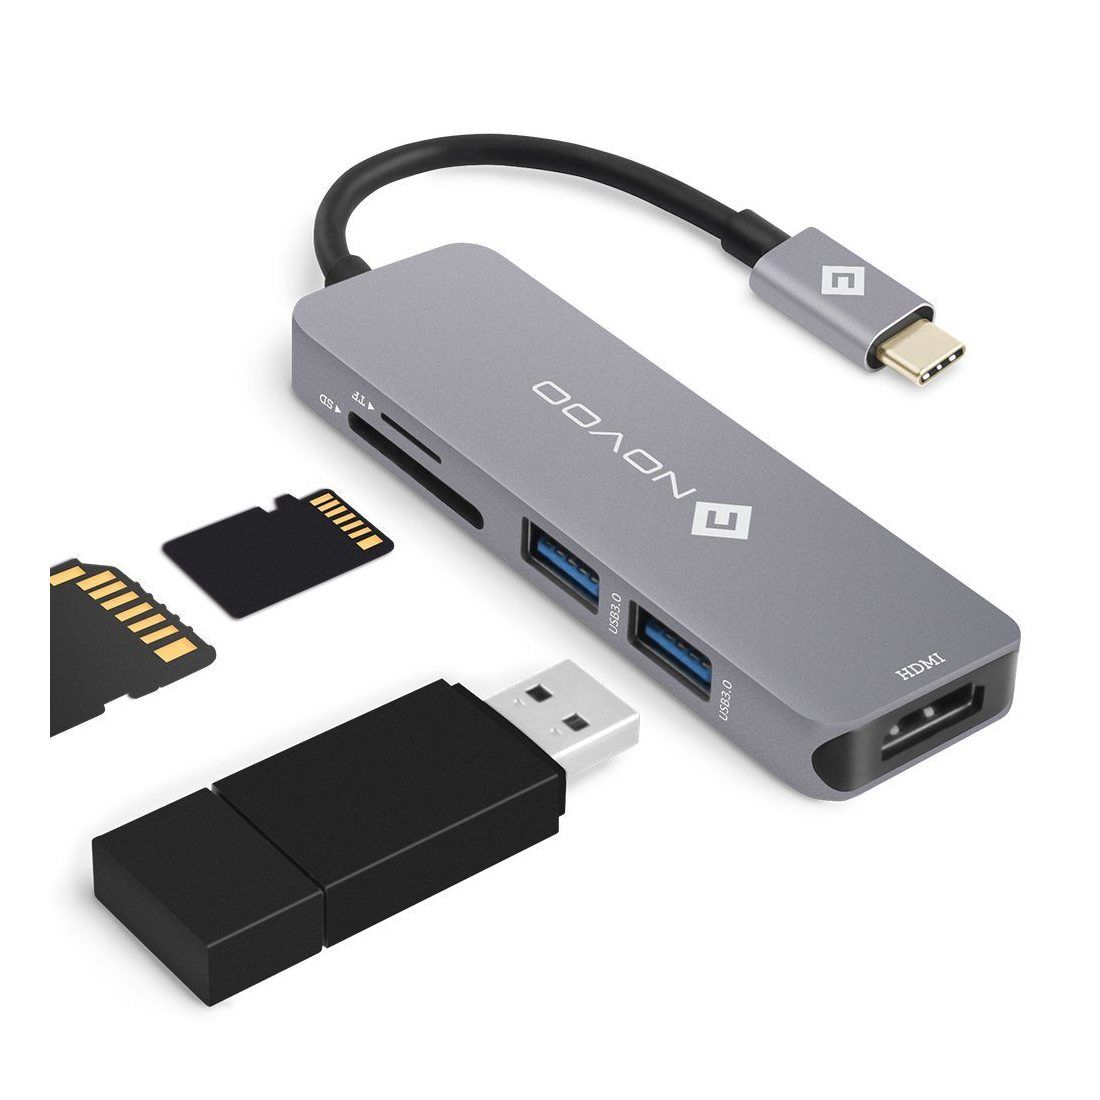 Usb c концентратор hdmi. Адаптер Hub многопортовый 2x USB-C = 1x HDMI 2,0, 2xusb 3.1, 2x USB-C, SD, MICROSD / серый. 9-Портовый концентратор NOVOO Type c-DM. USB Hub Huawei. USB концентратор с HDMI.